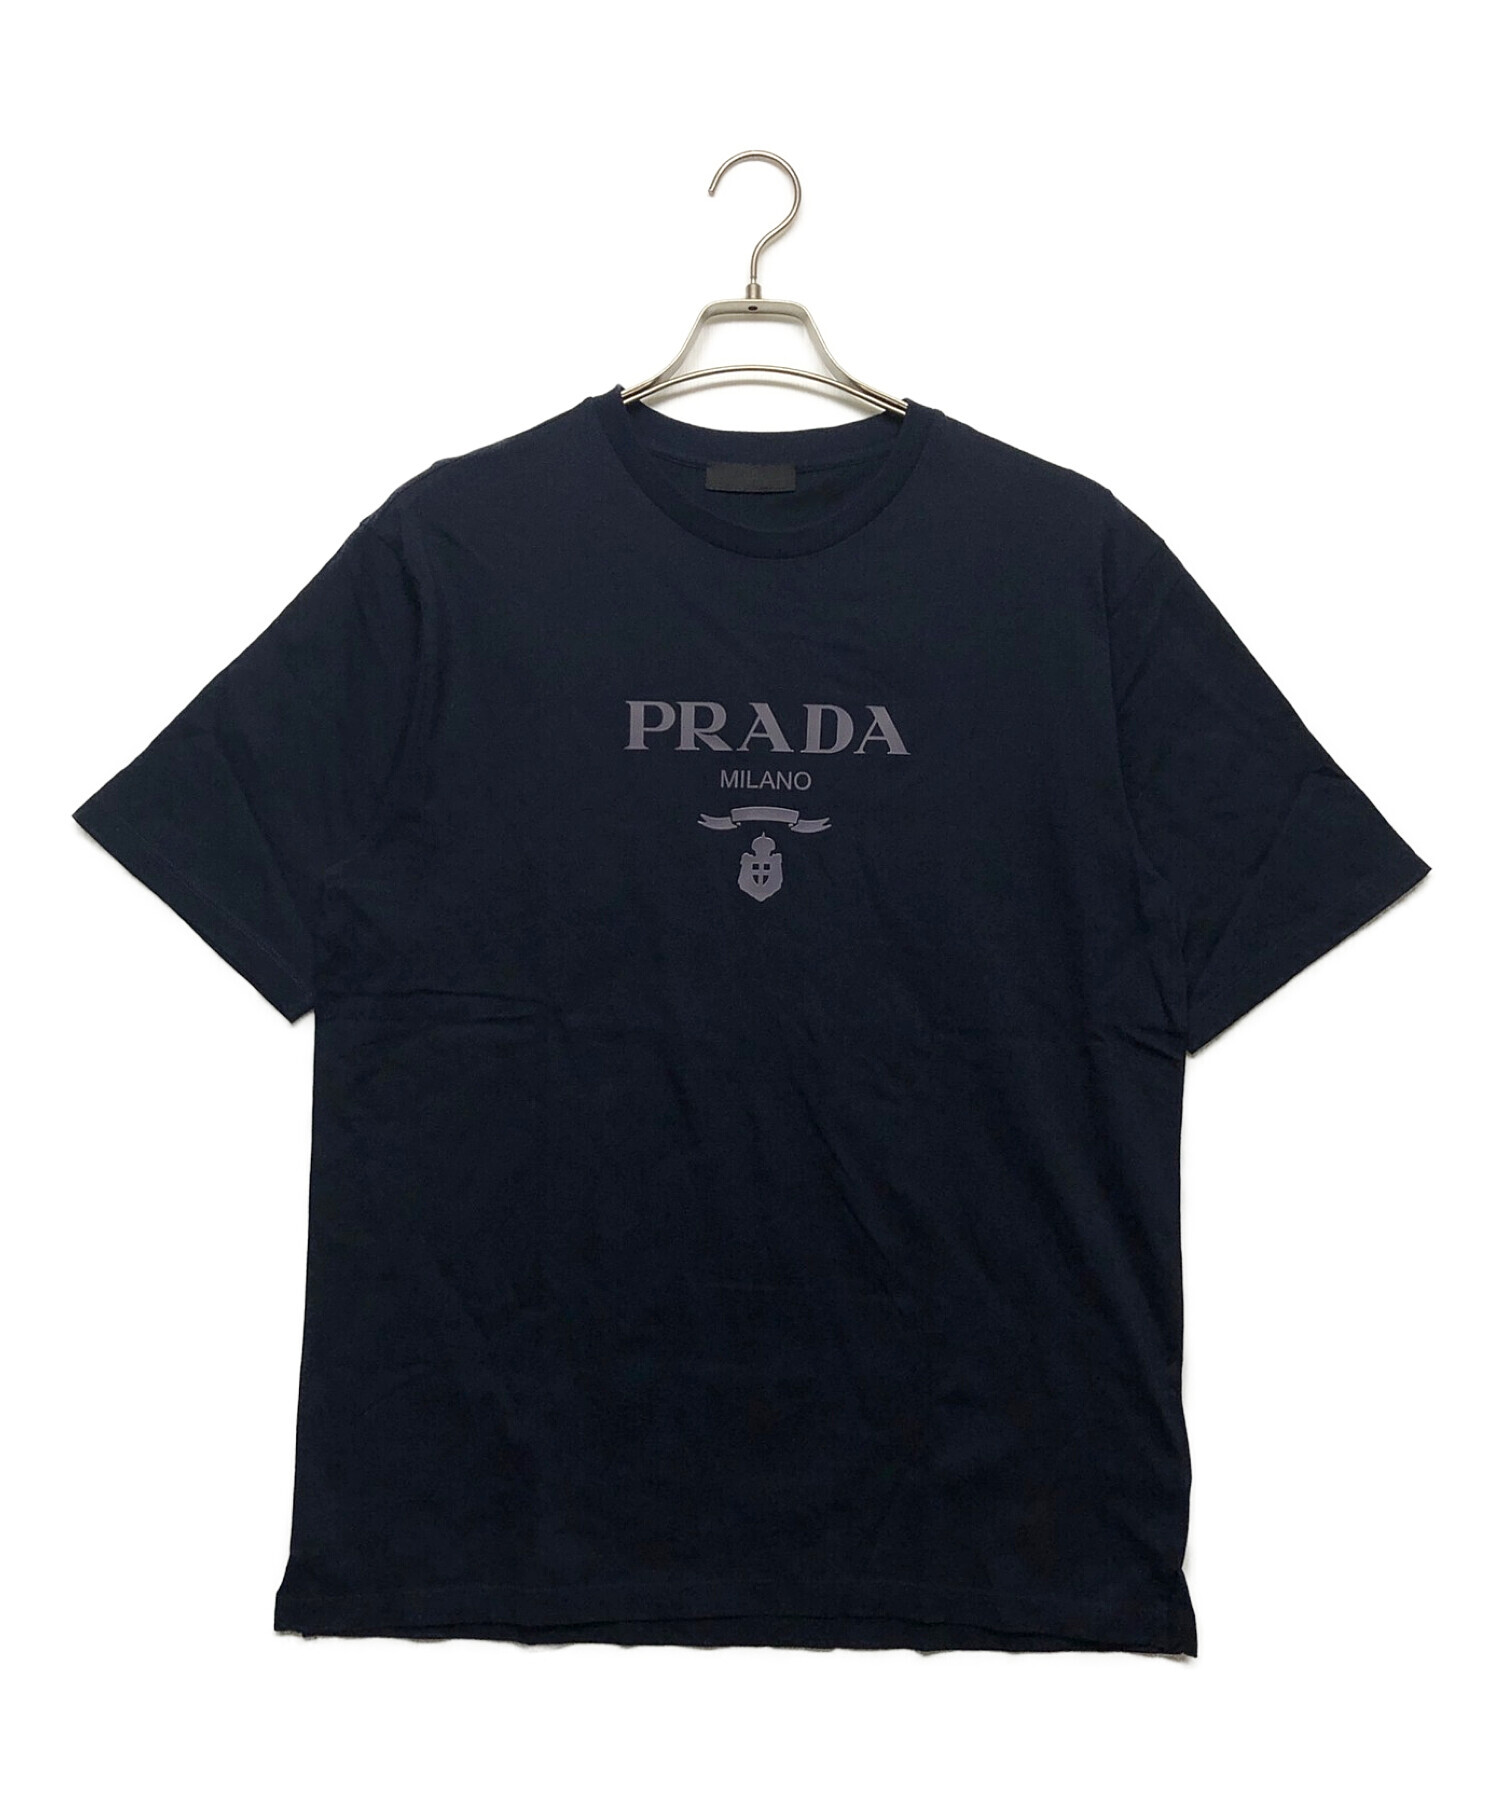 PRADA (プラダ) ロゴプリントTシャツ ネイビー サイズ:L